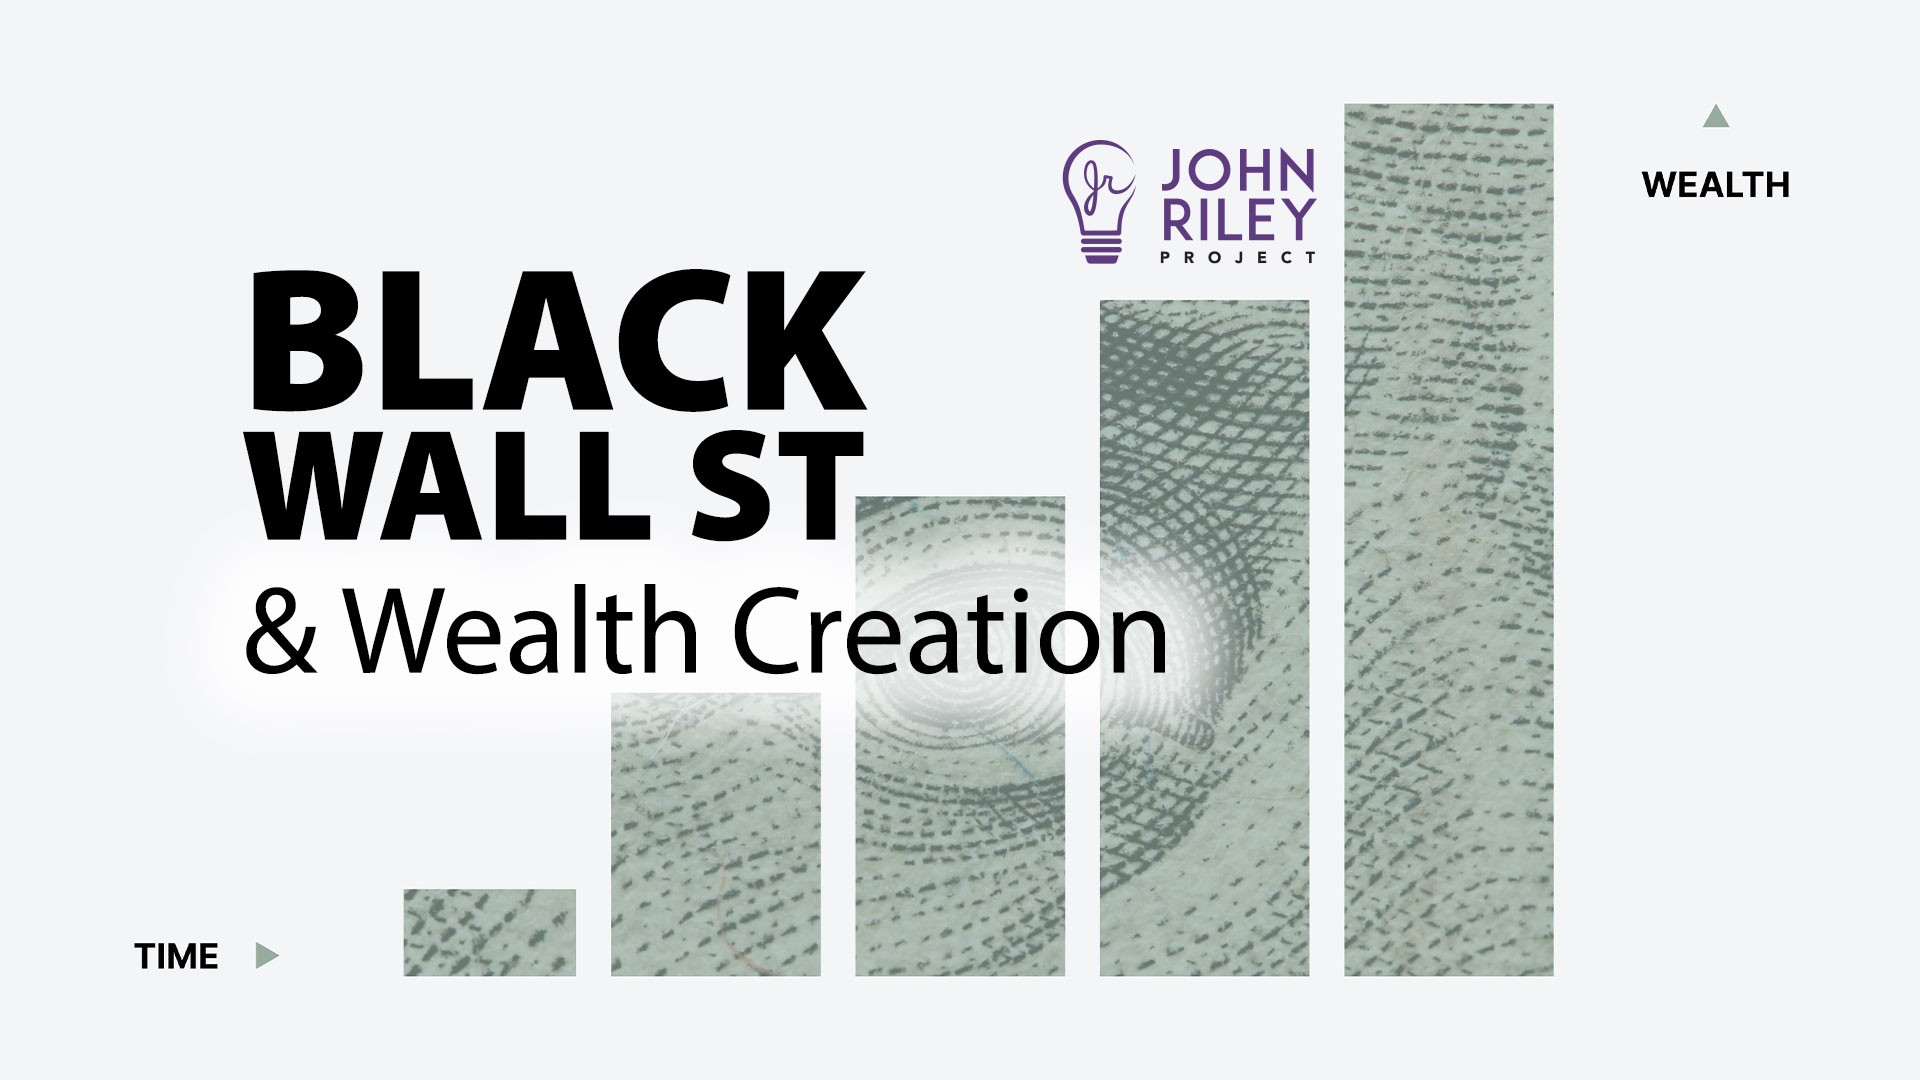 black wall street, wealth creation, tulsa race massacre, john riley project, jrp0239